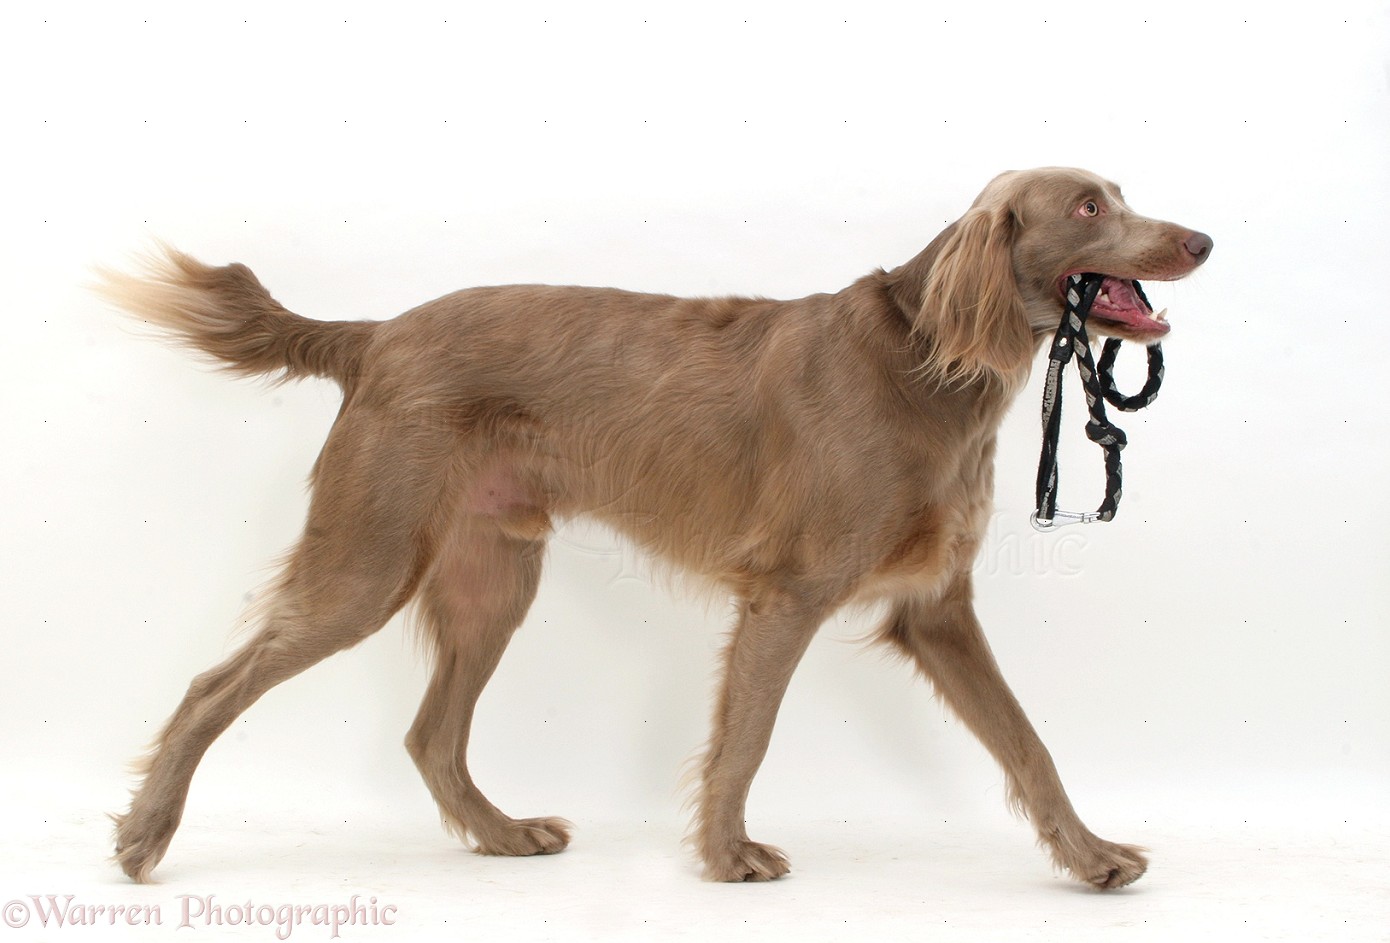 Long-haired Weimaraner dog trotting across photo WP14169